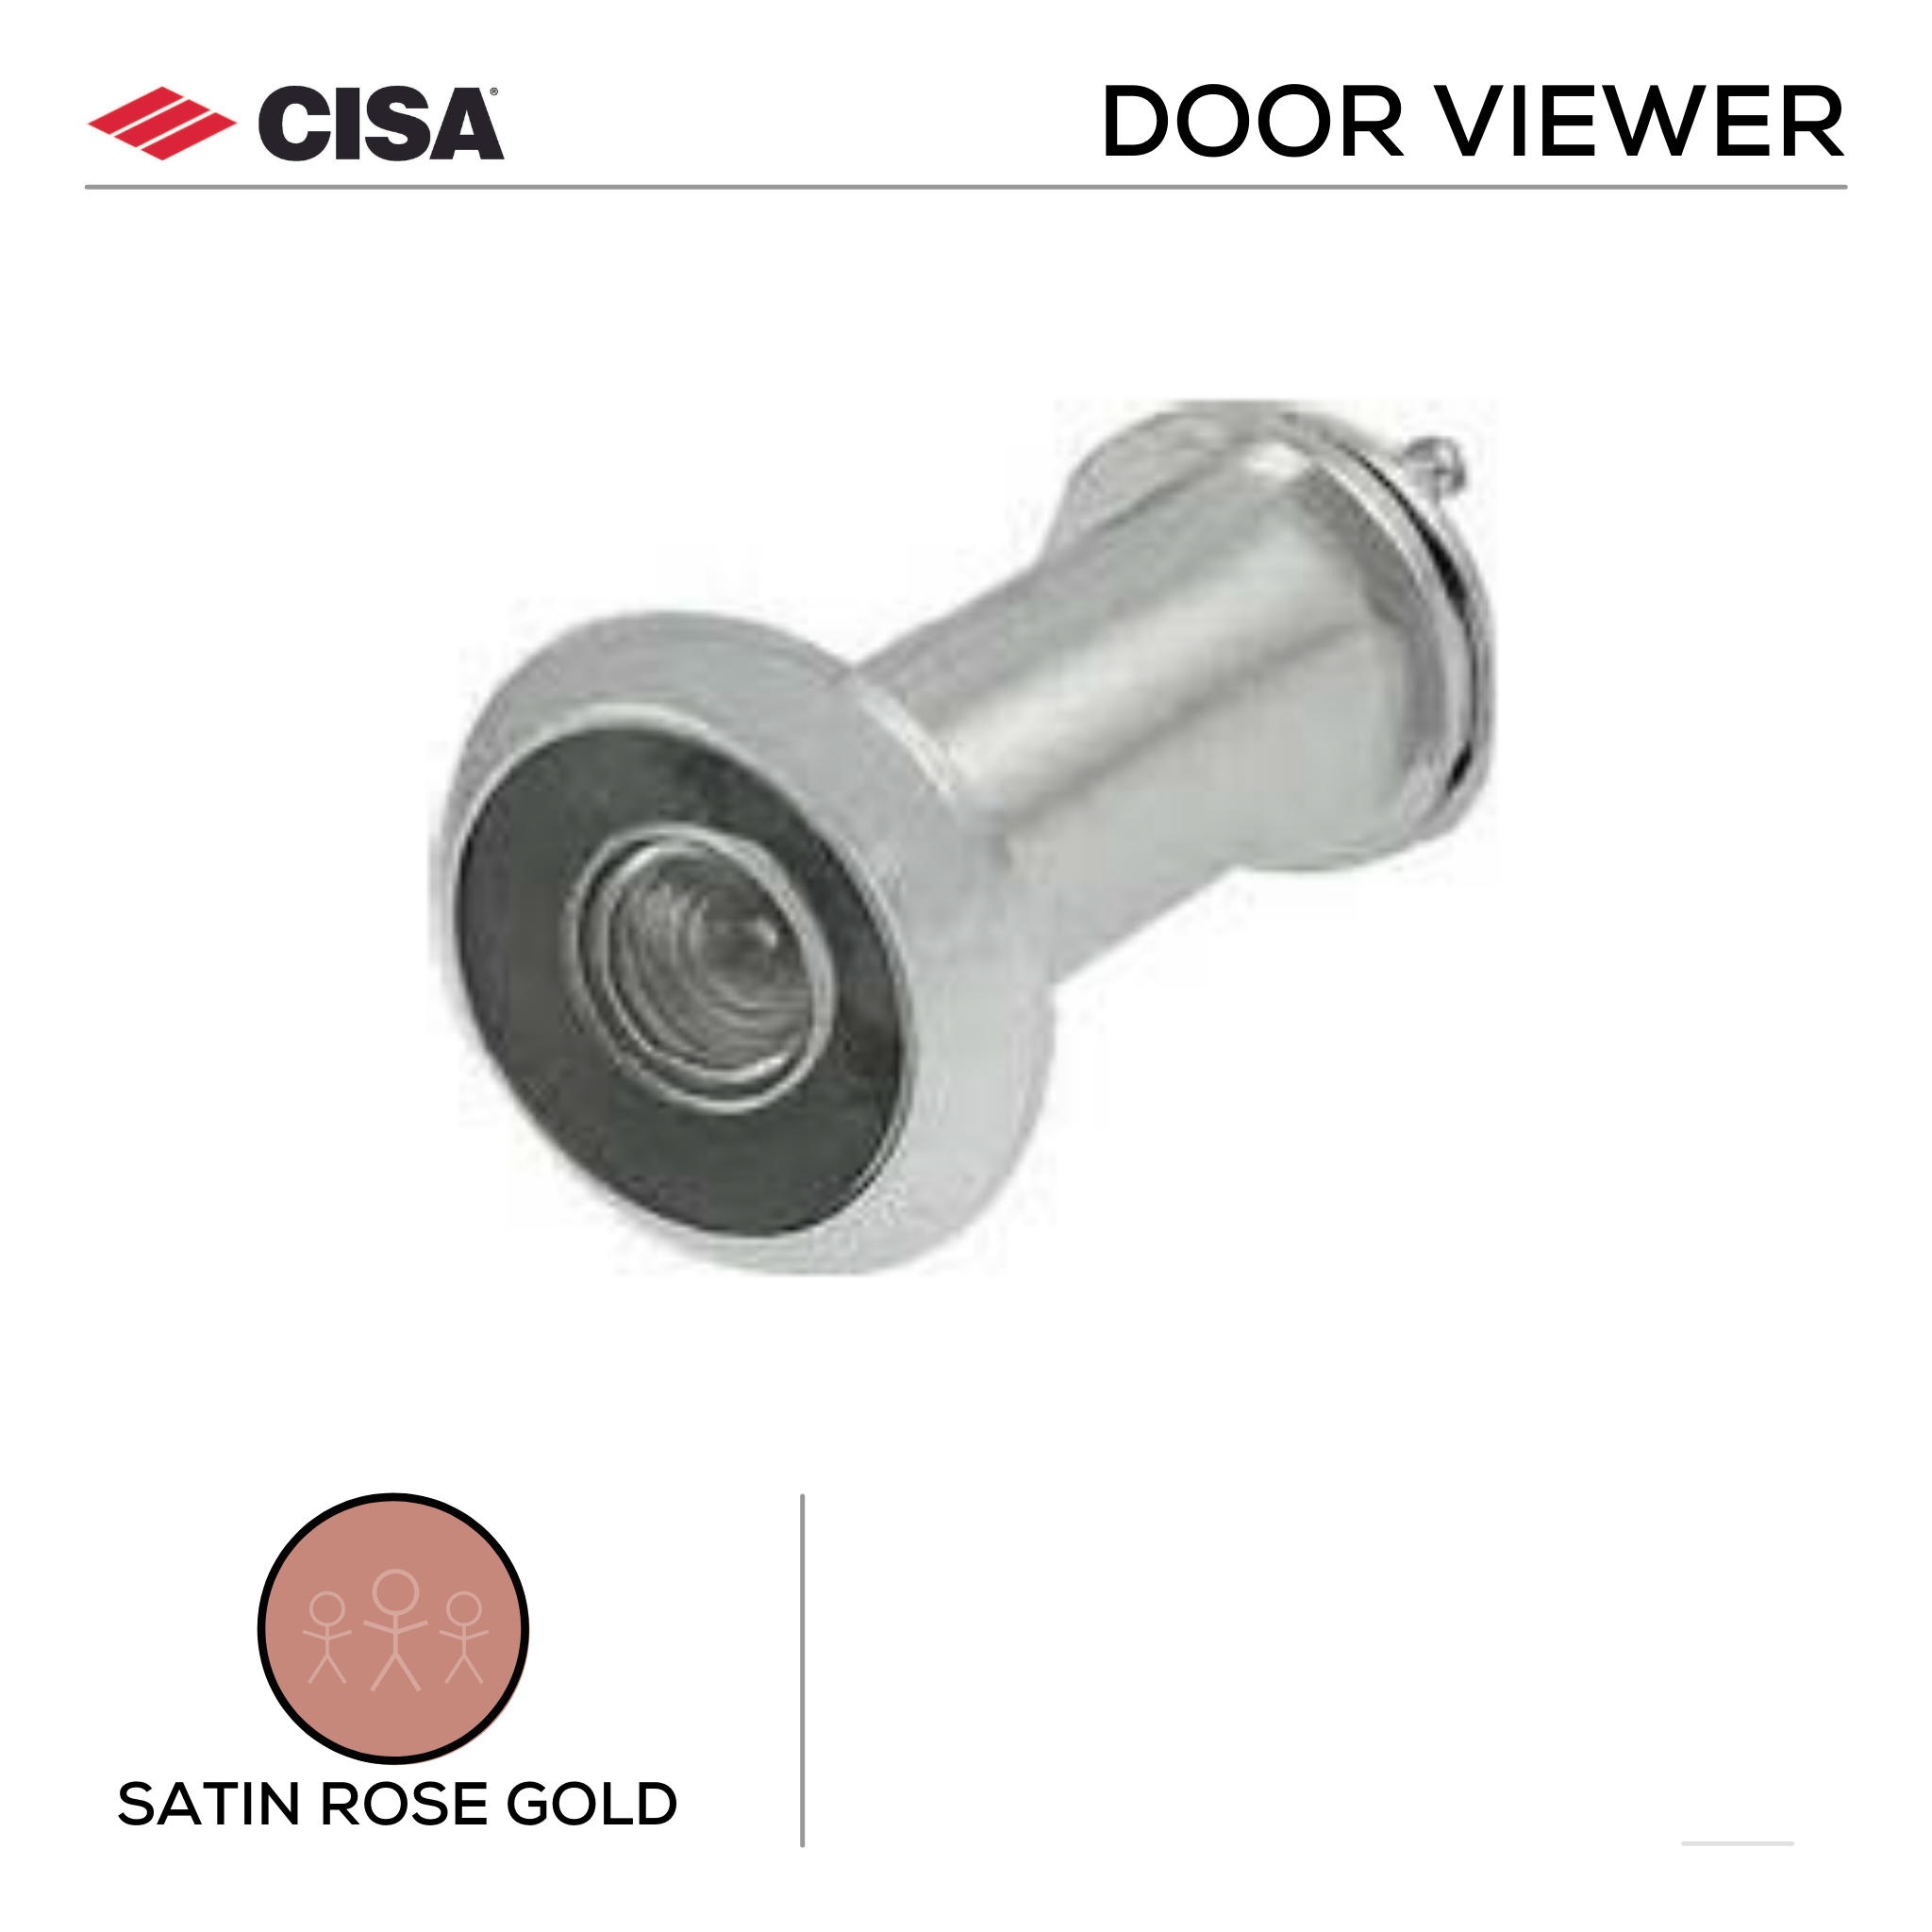 FDV1.SRG, Door Viewer, 40-44mm (l), 180º View, Satin Rose Gold, CISA